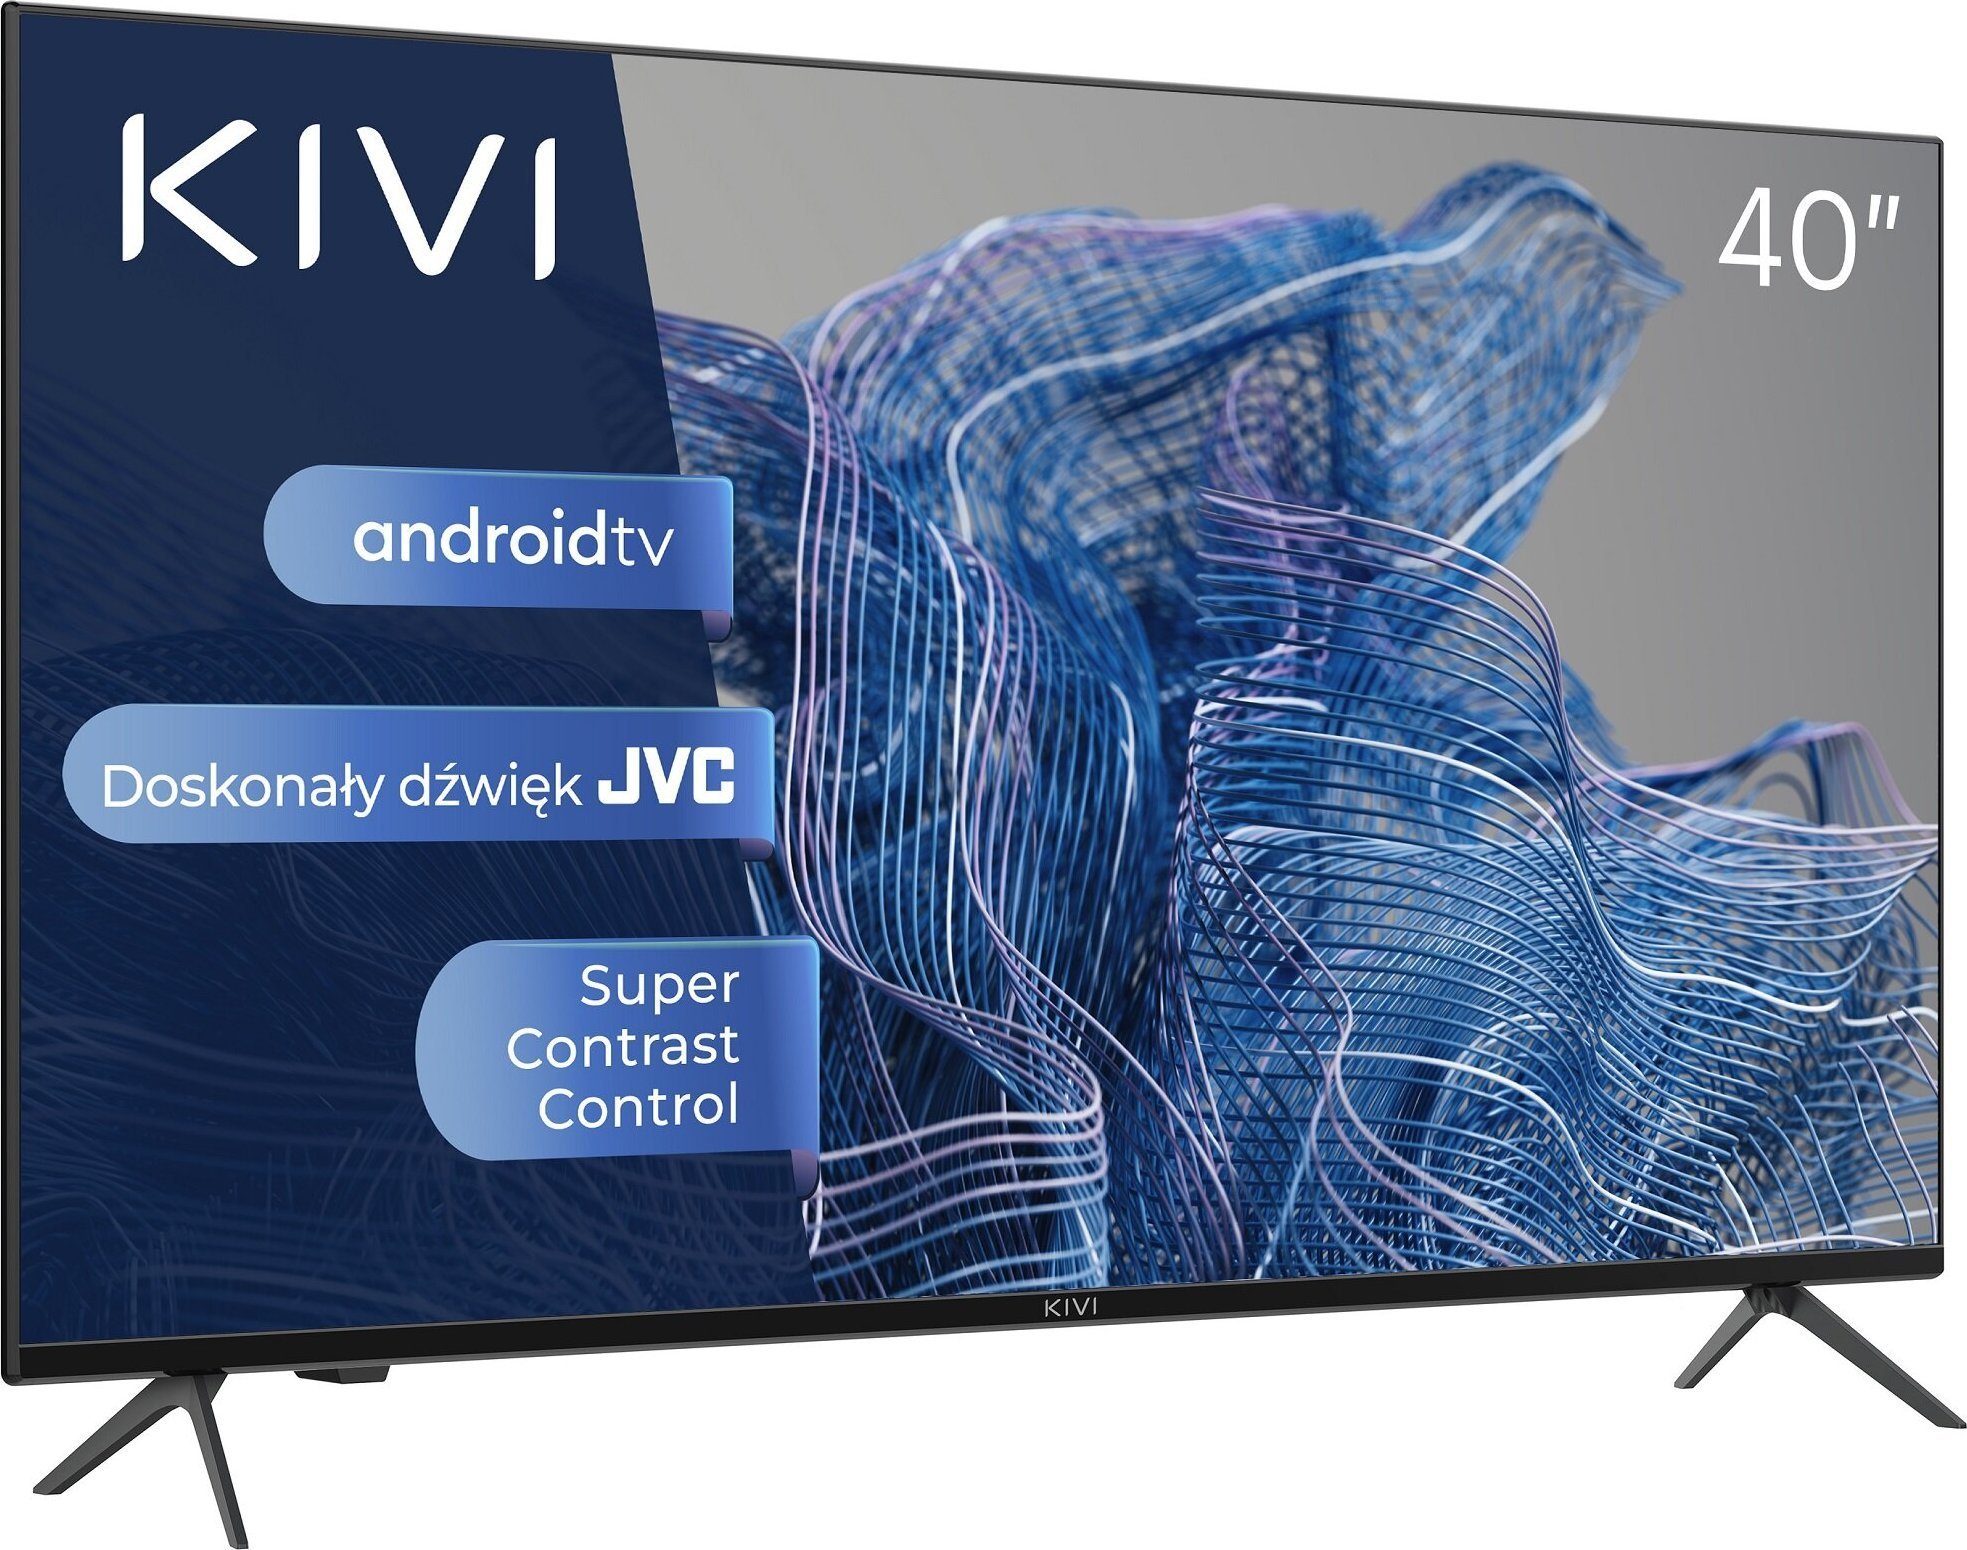 Telewizor Kivi 40&apos;, FHD, Google Android TV, Black, 1920x1080, 60 Hz, Sound by JVC, 2x8W, 41 kWh/1000h , BT5, HDMI ports 3, 24 months